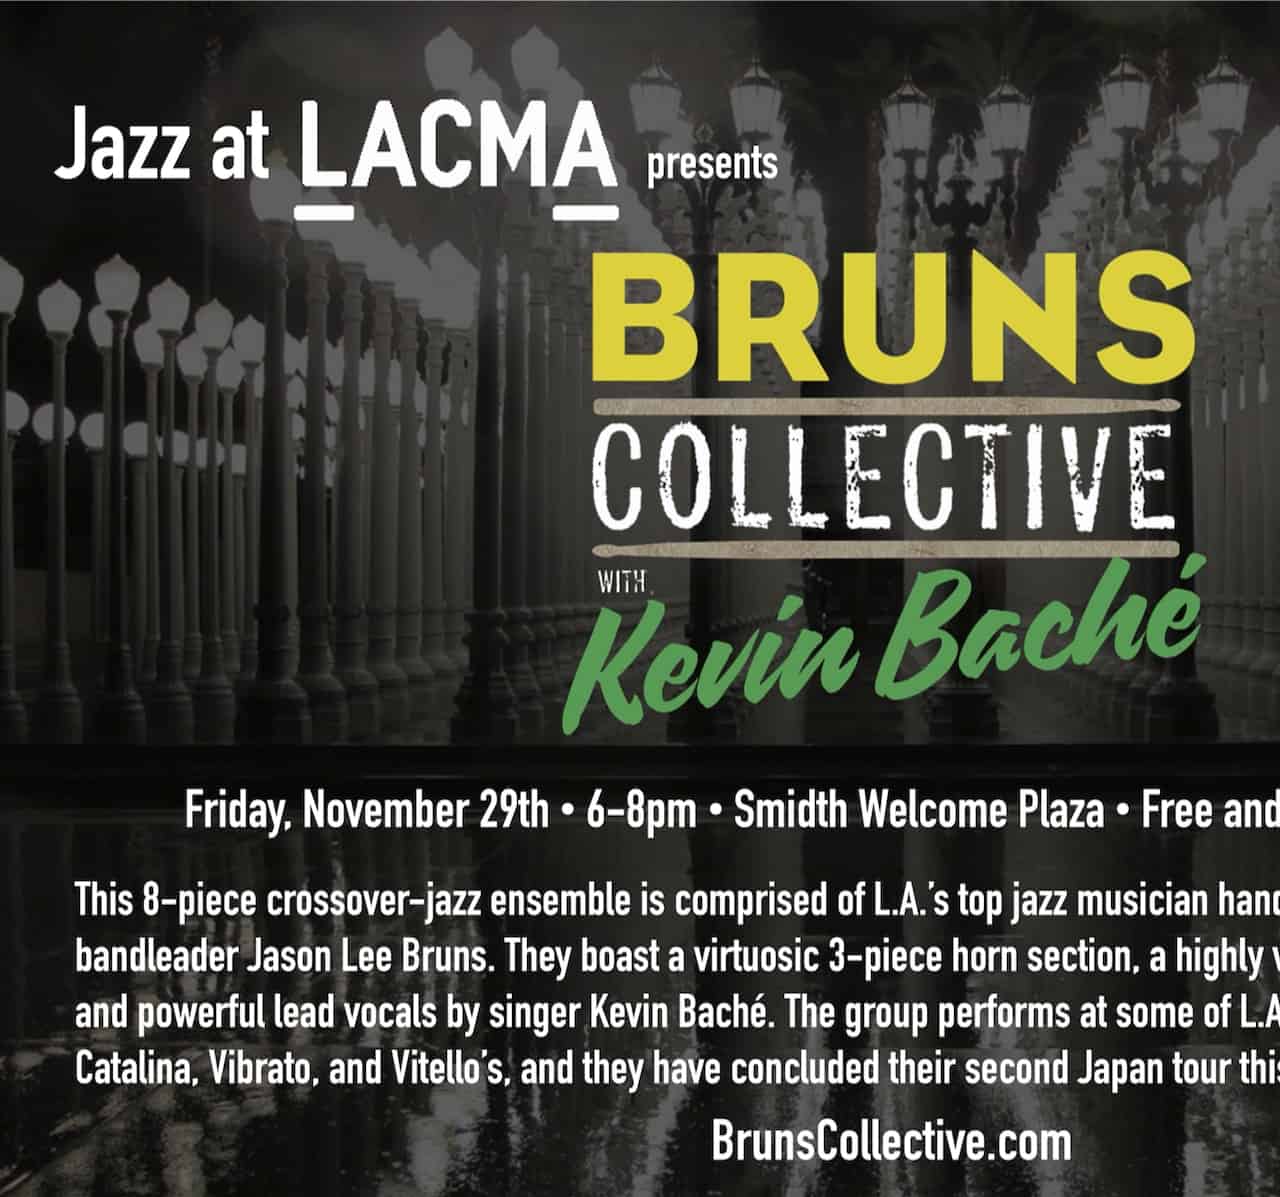 Jazz at LACMA premier